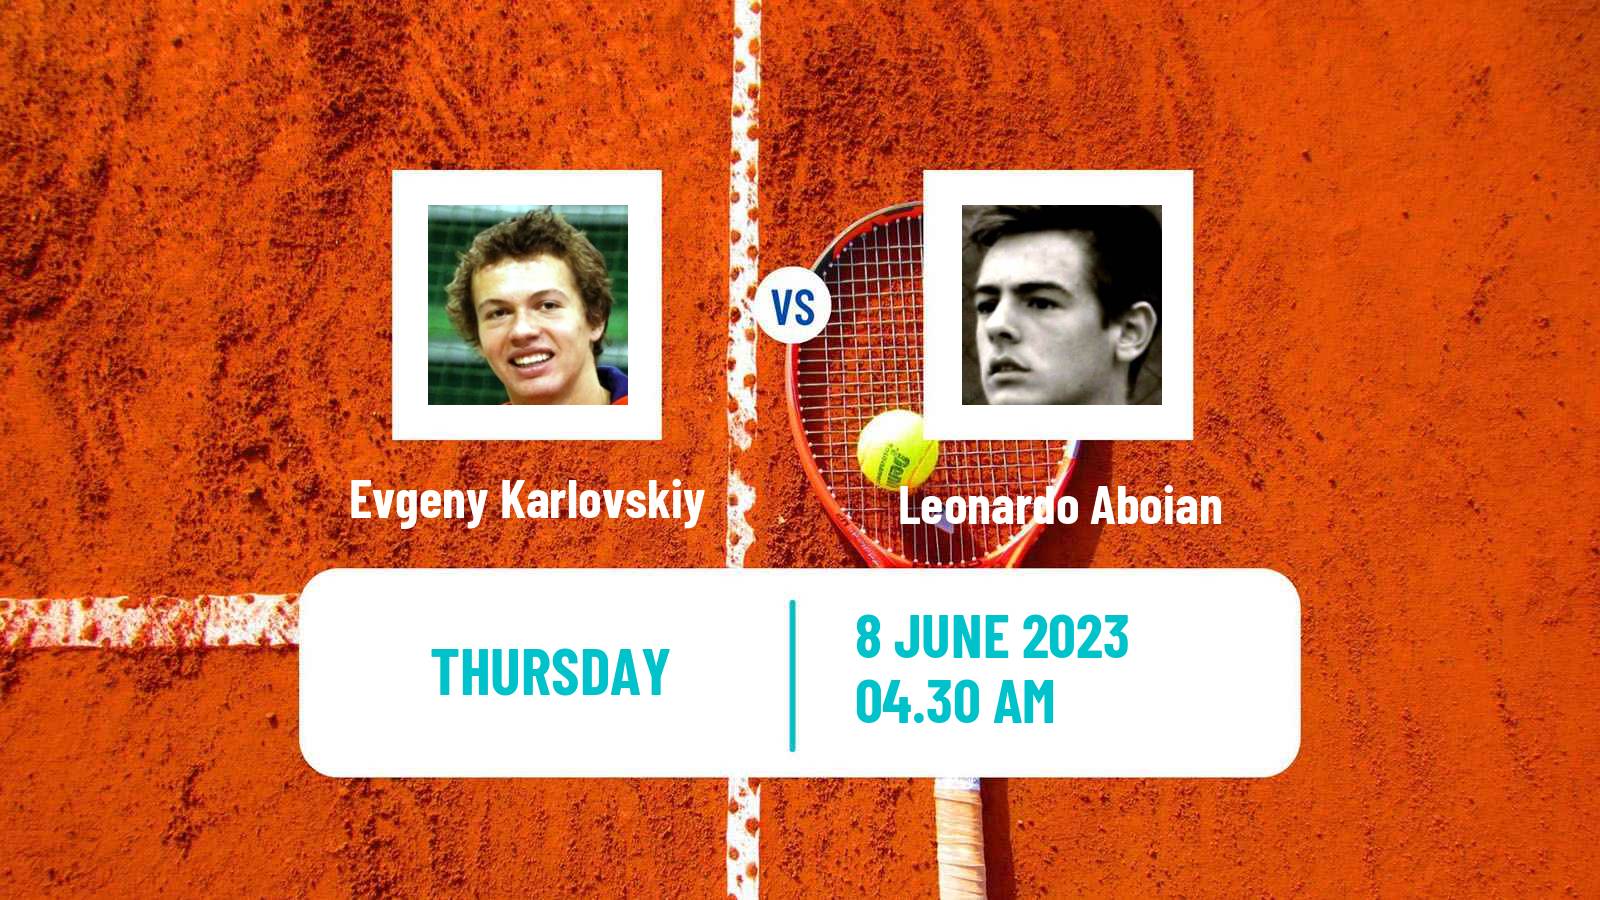 Tennis ITF M25 Kursumlijska Banja 3 Men Evgeny Karlovskiy - Leonardo Aboian